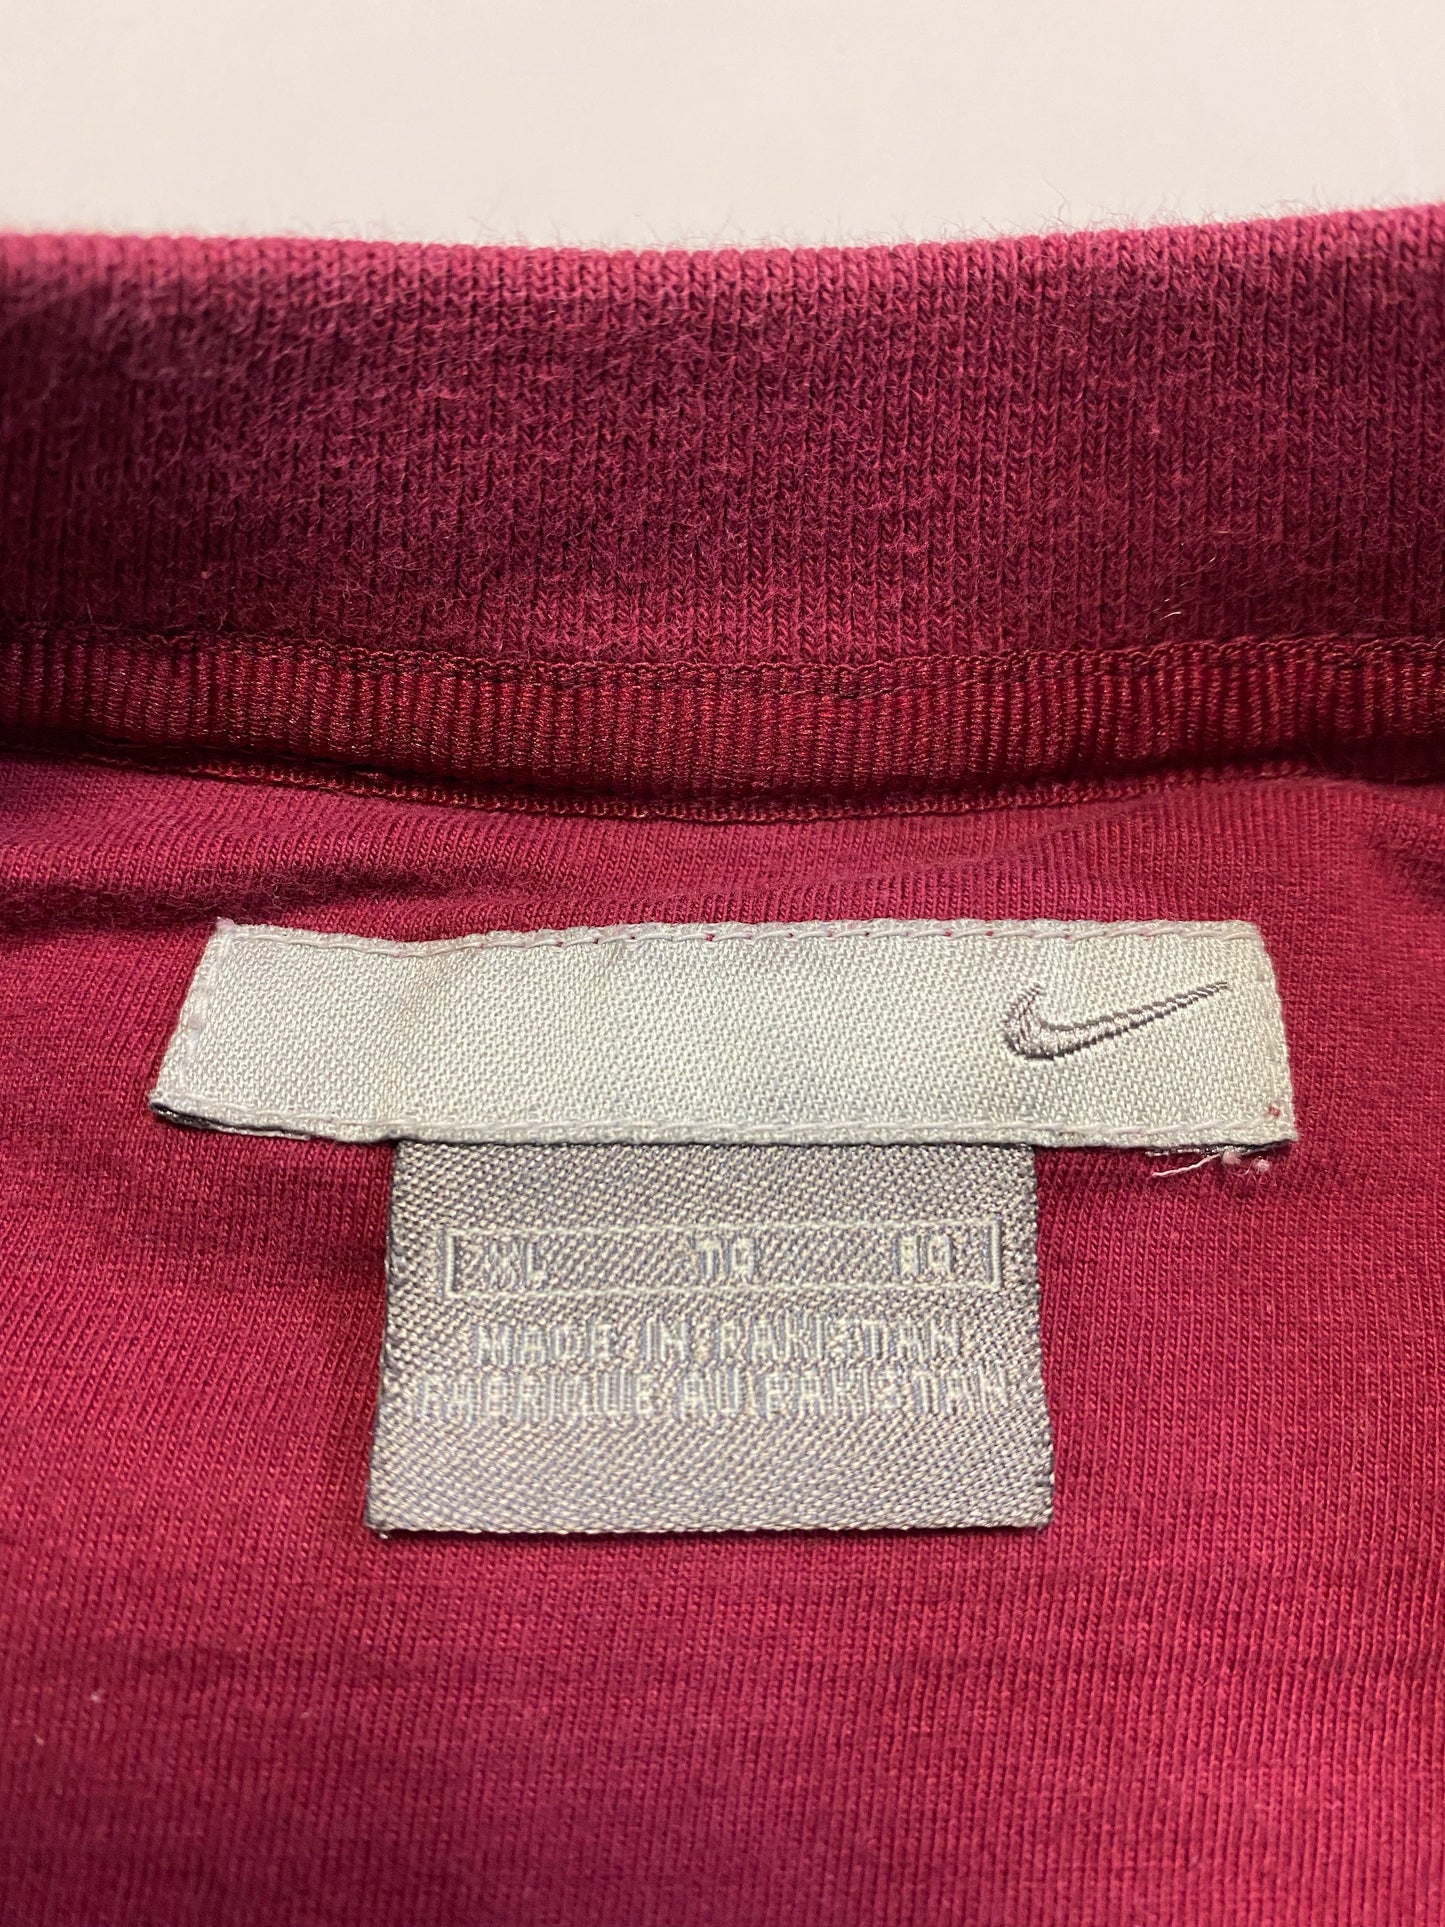 2000’s Nike Plain Swoosh Event Staff Sweatshirt